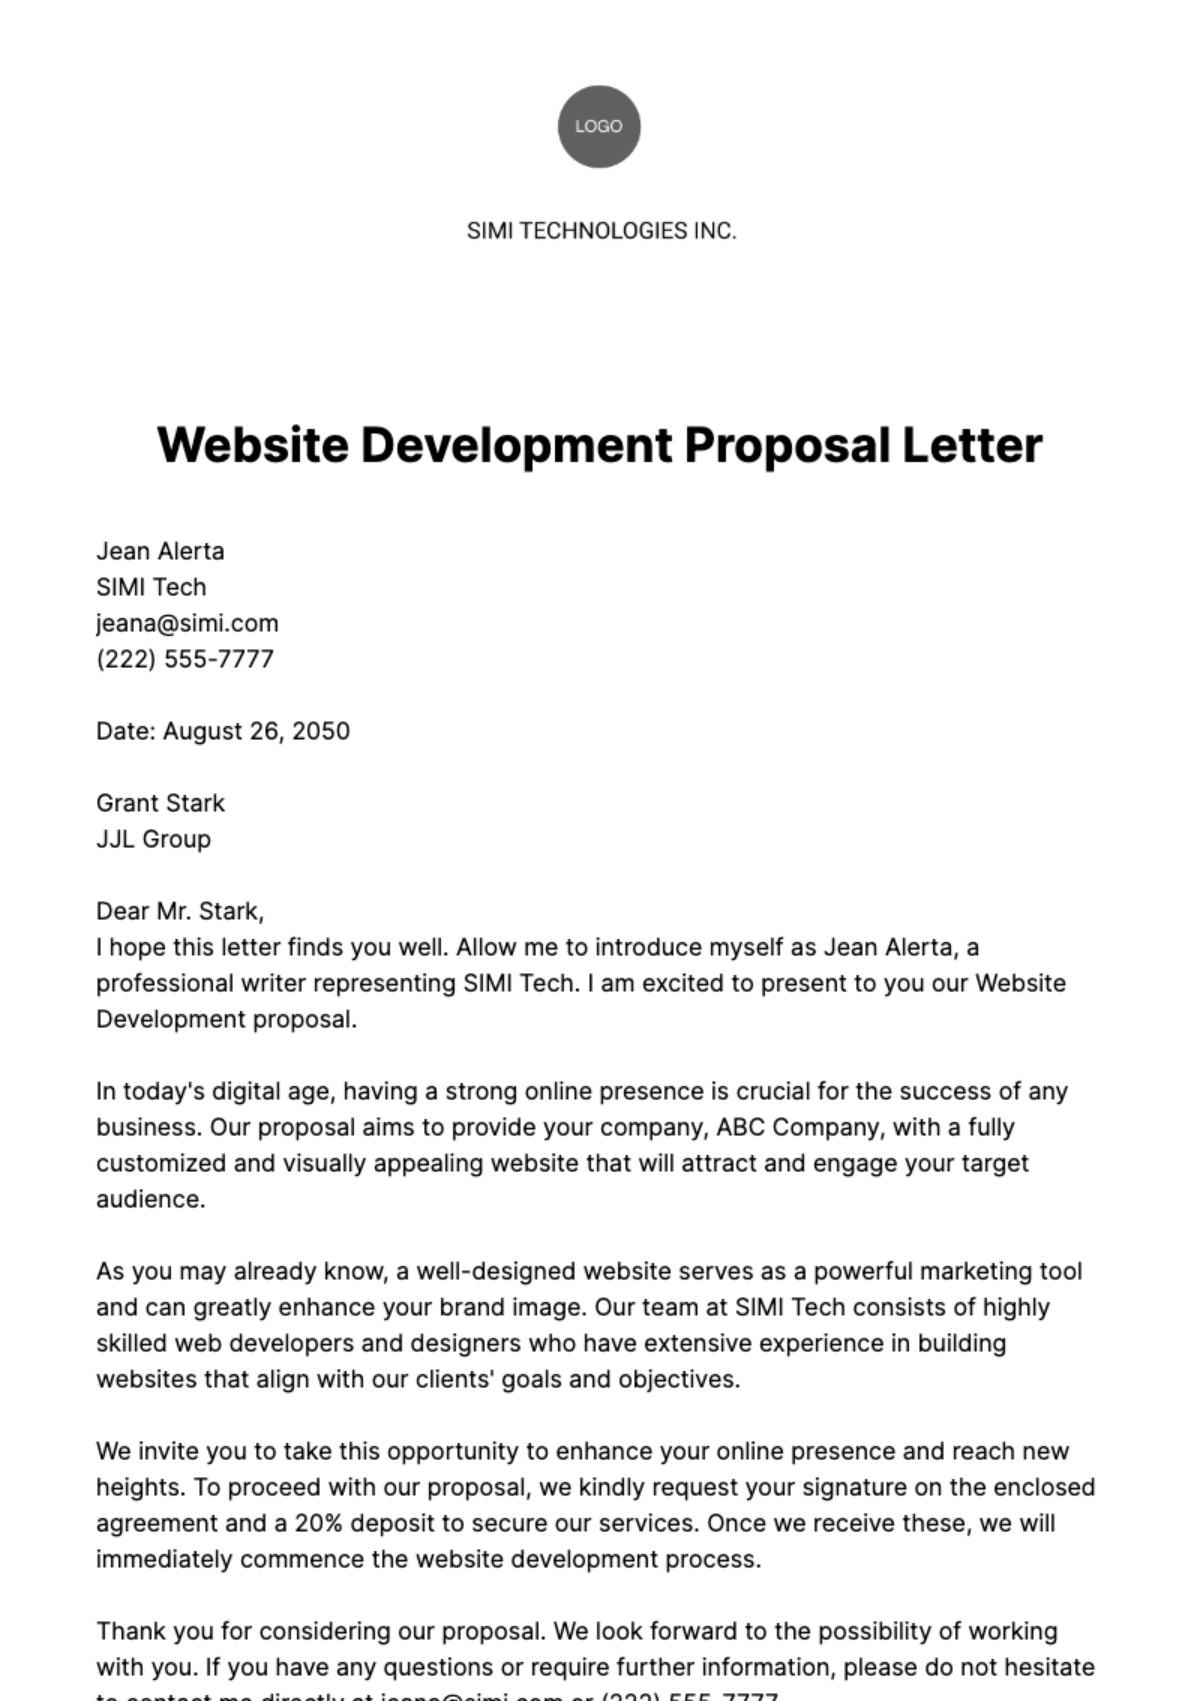 Website Development Proposal Letter Template